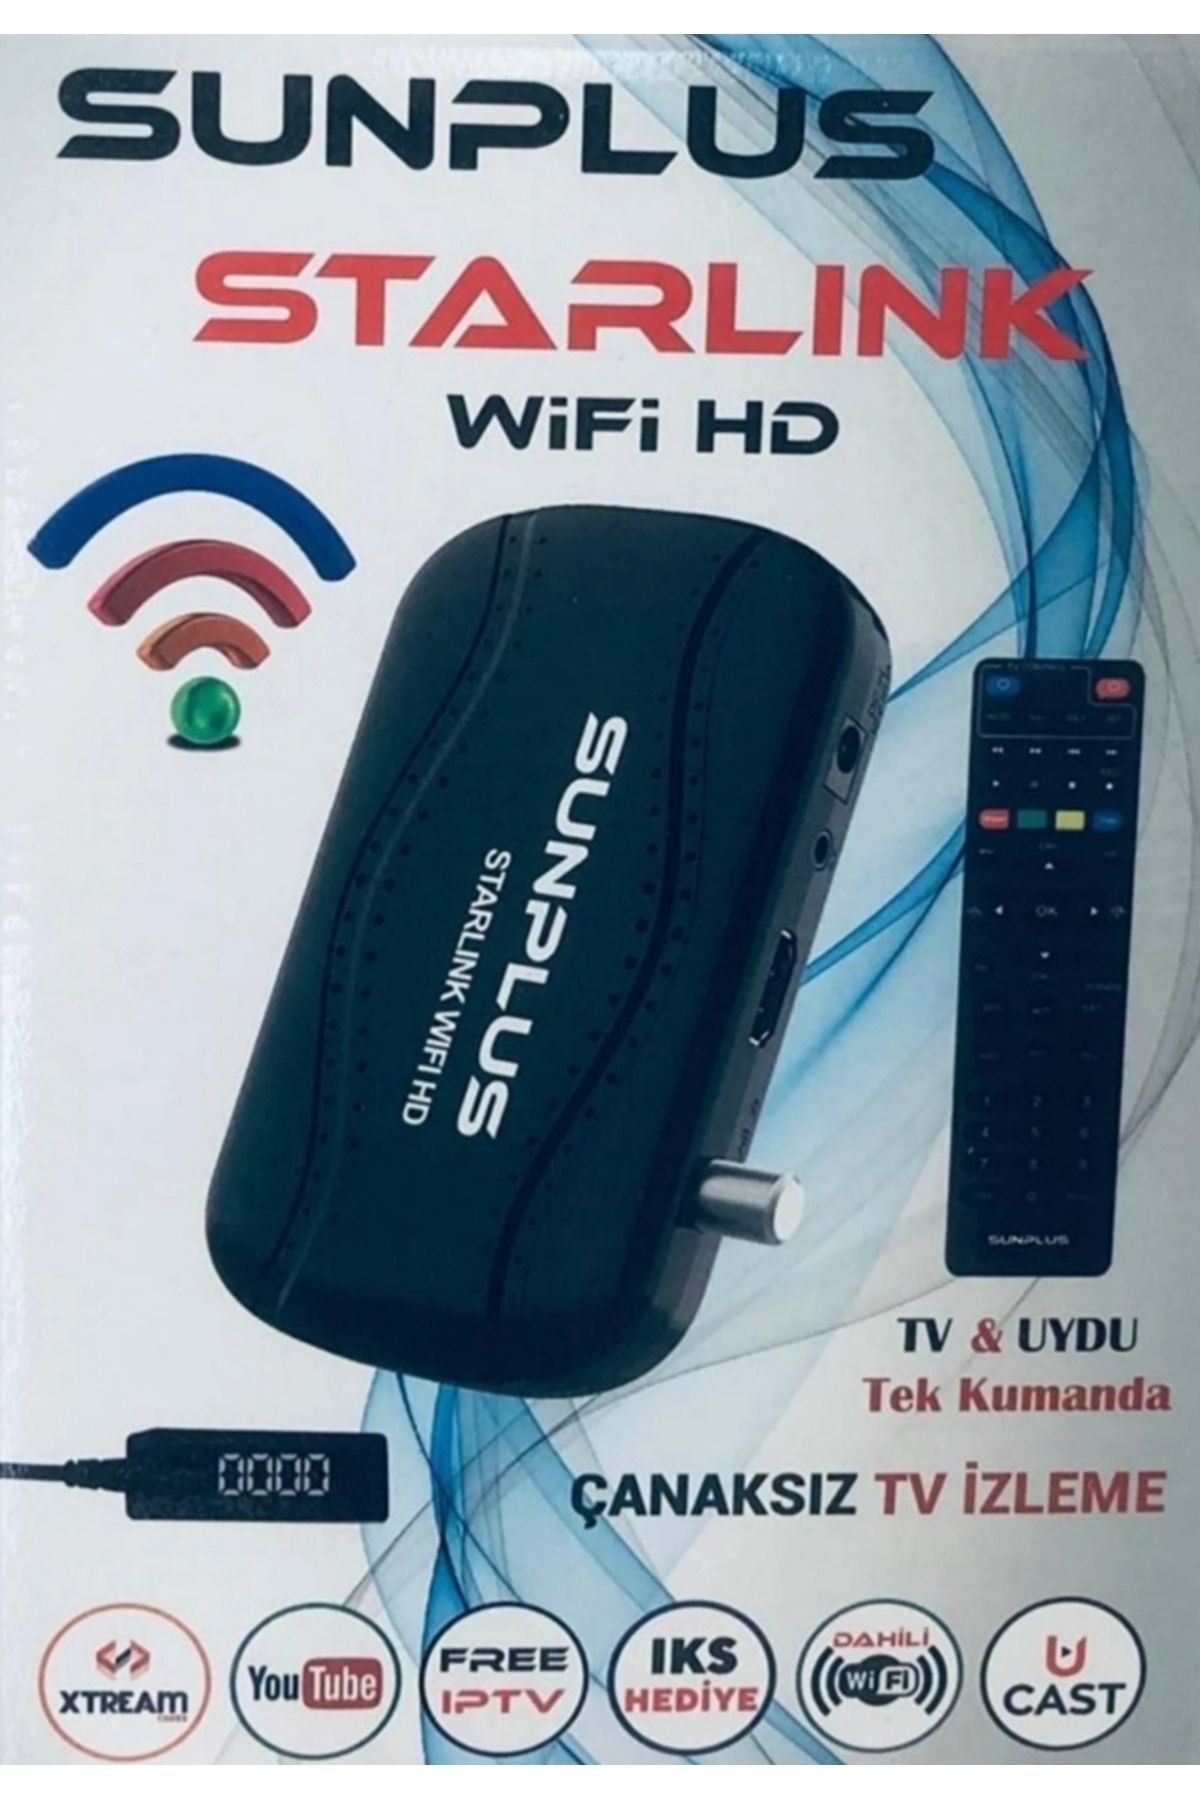 Sunplus STARLINK HD UYDU ALICISI DAHİLİ Wİ-Fİ FULL HD 1080P TV & UYDU TEK KUMANDA